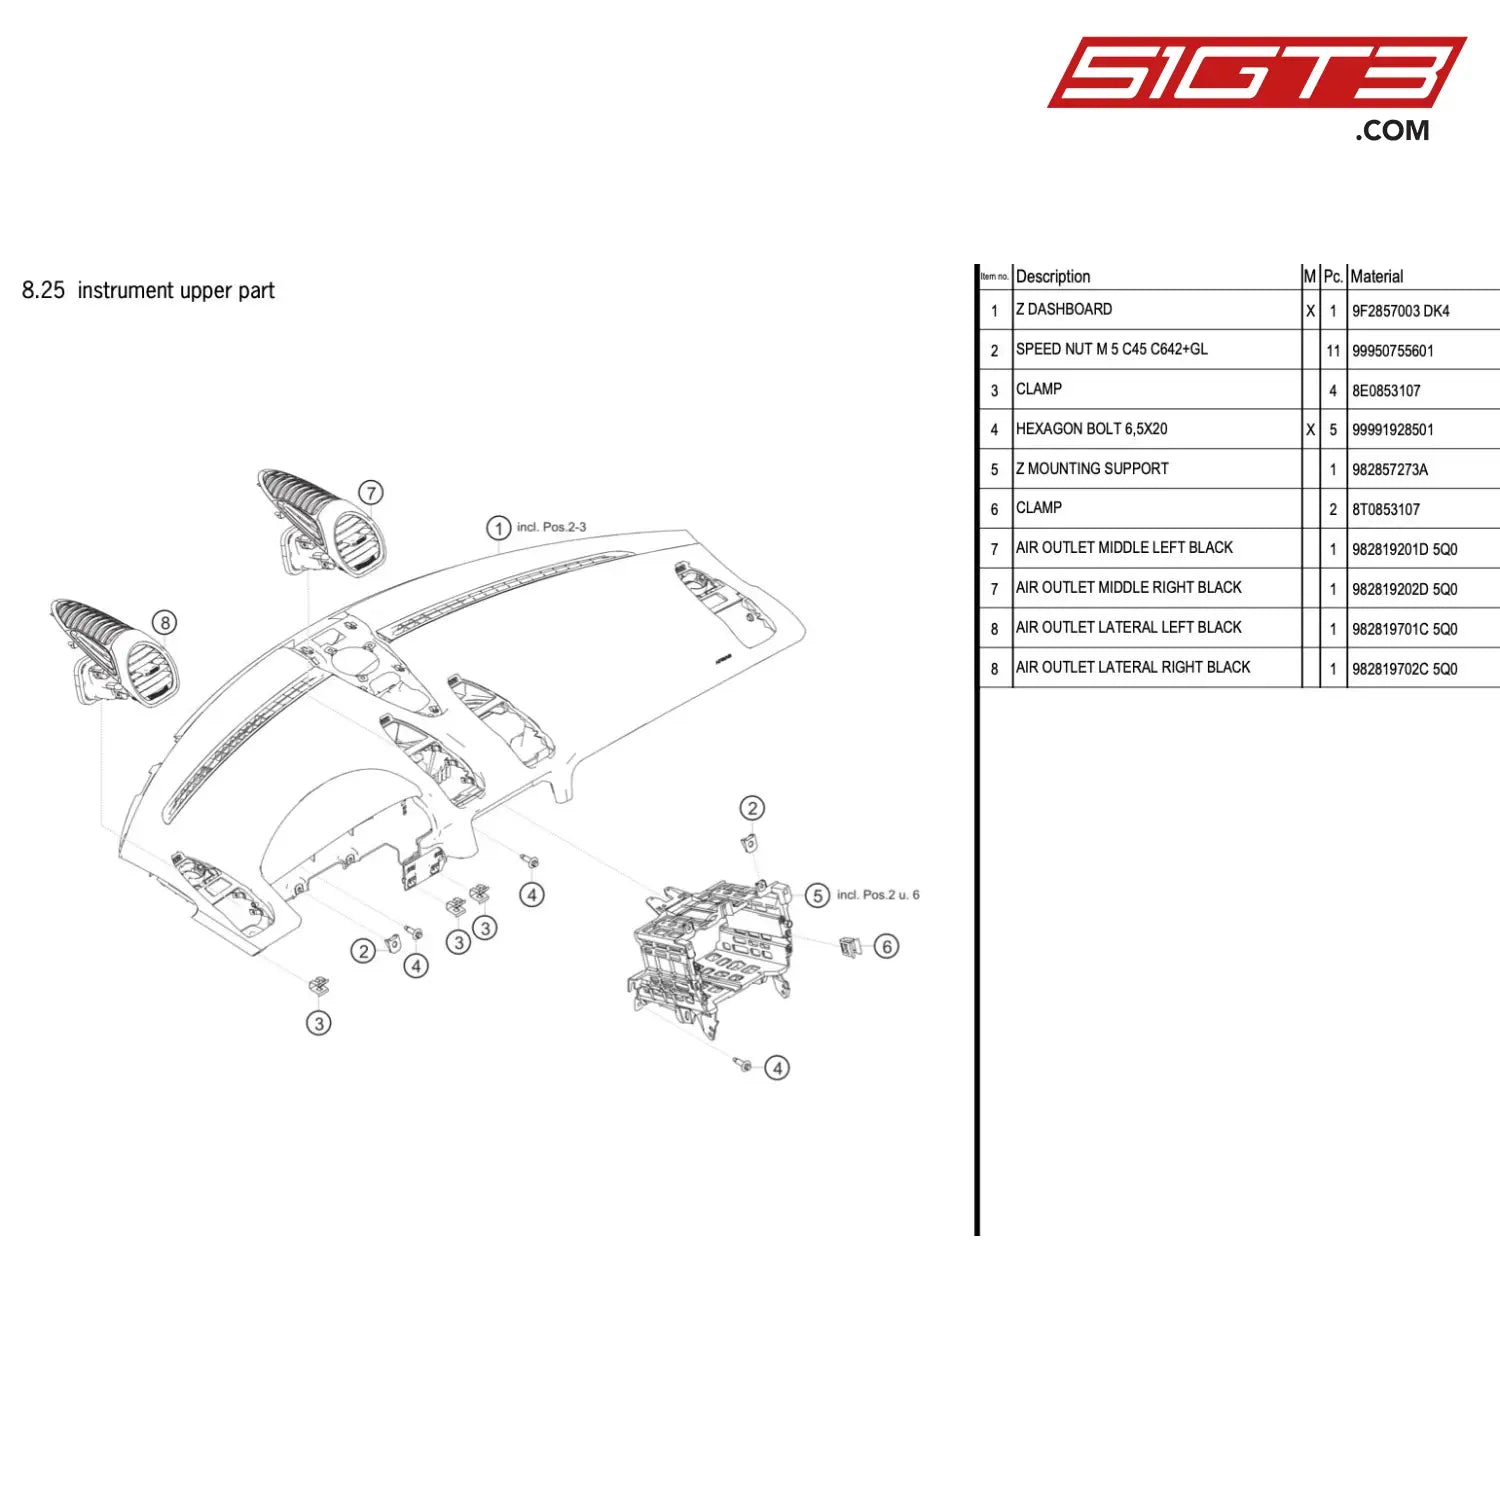 Speed Nut M 5 C45 C642+Gl - 99950755601 [Porsche 718 Cayman Gt4 Rs Clubsport] Instrument Upper Part